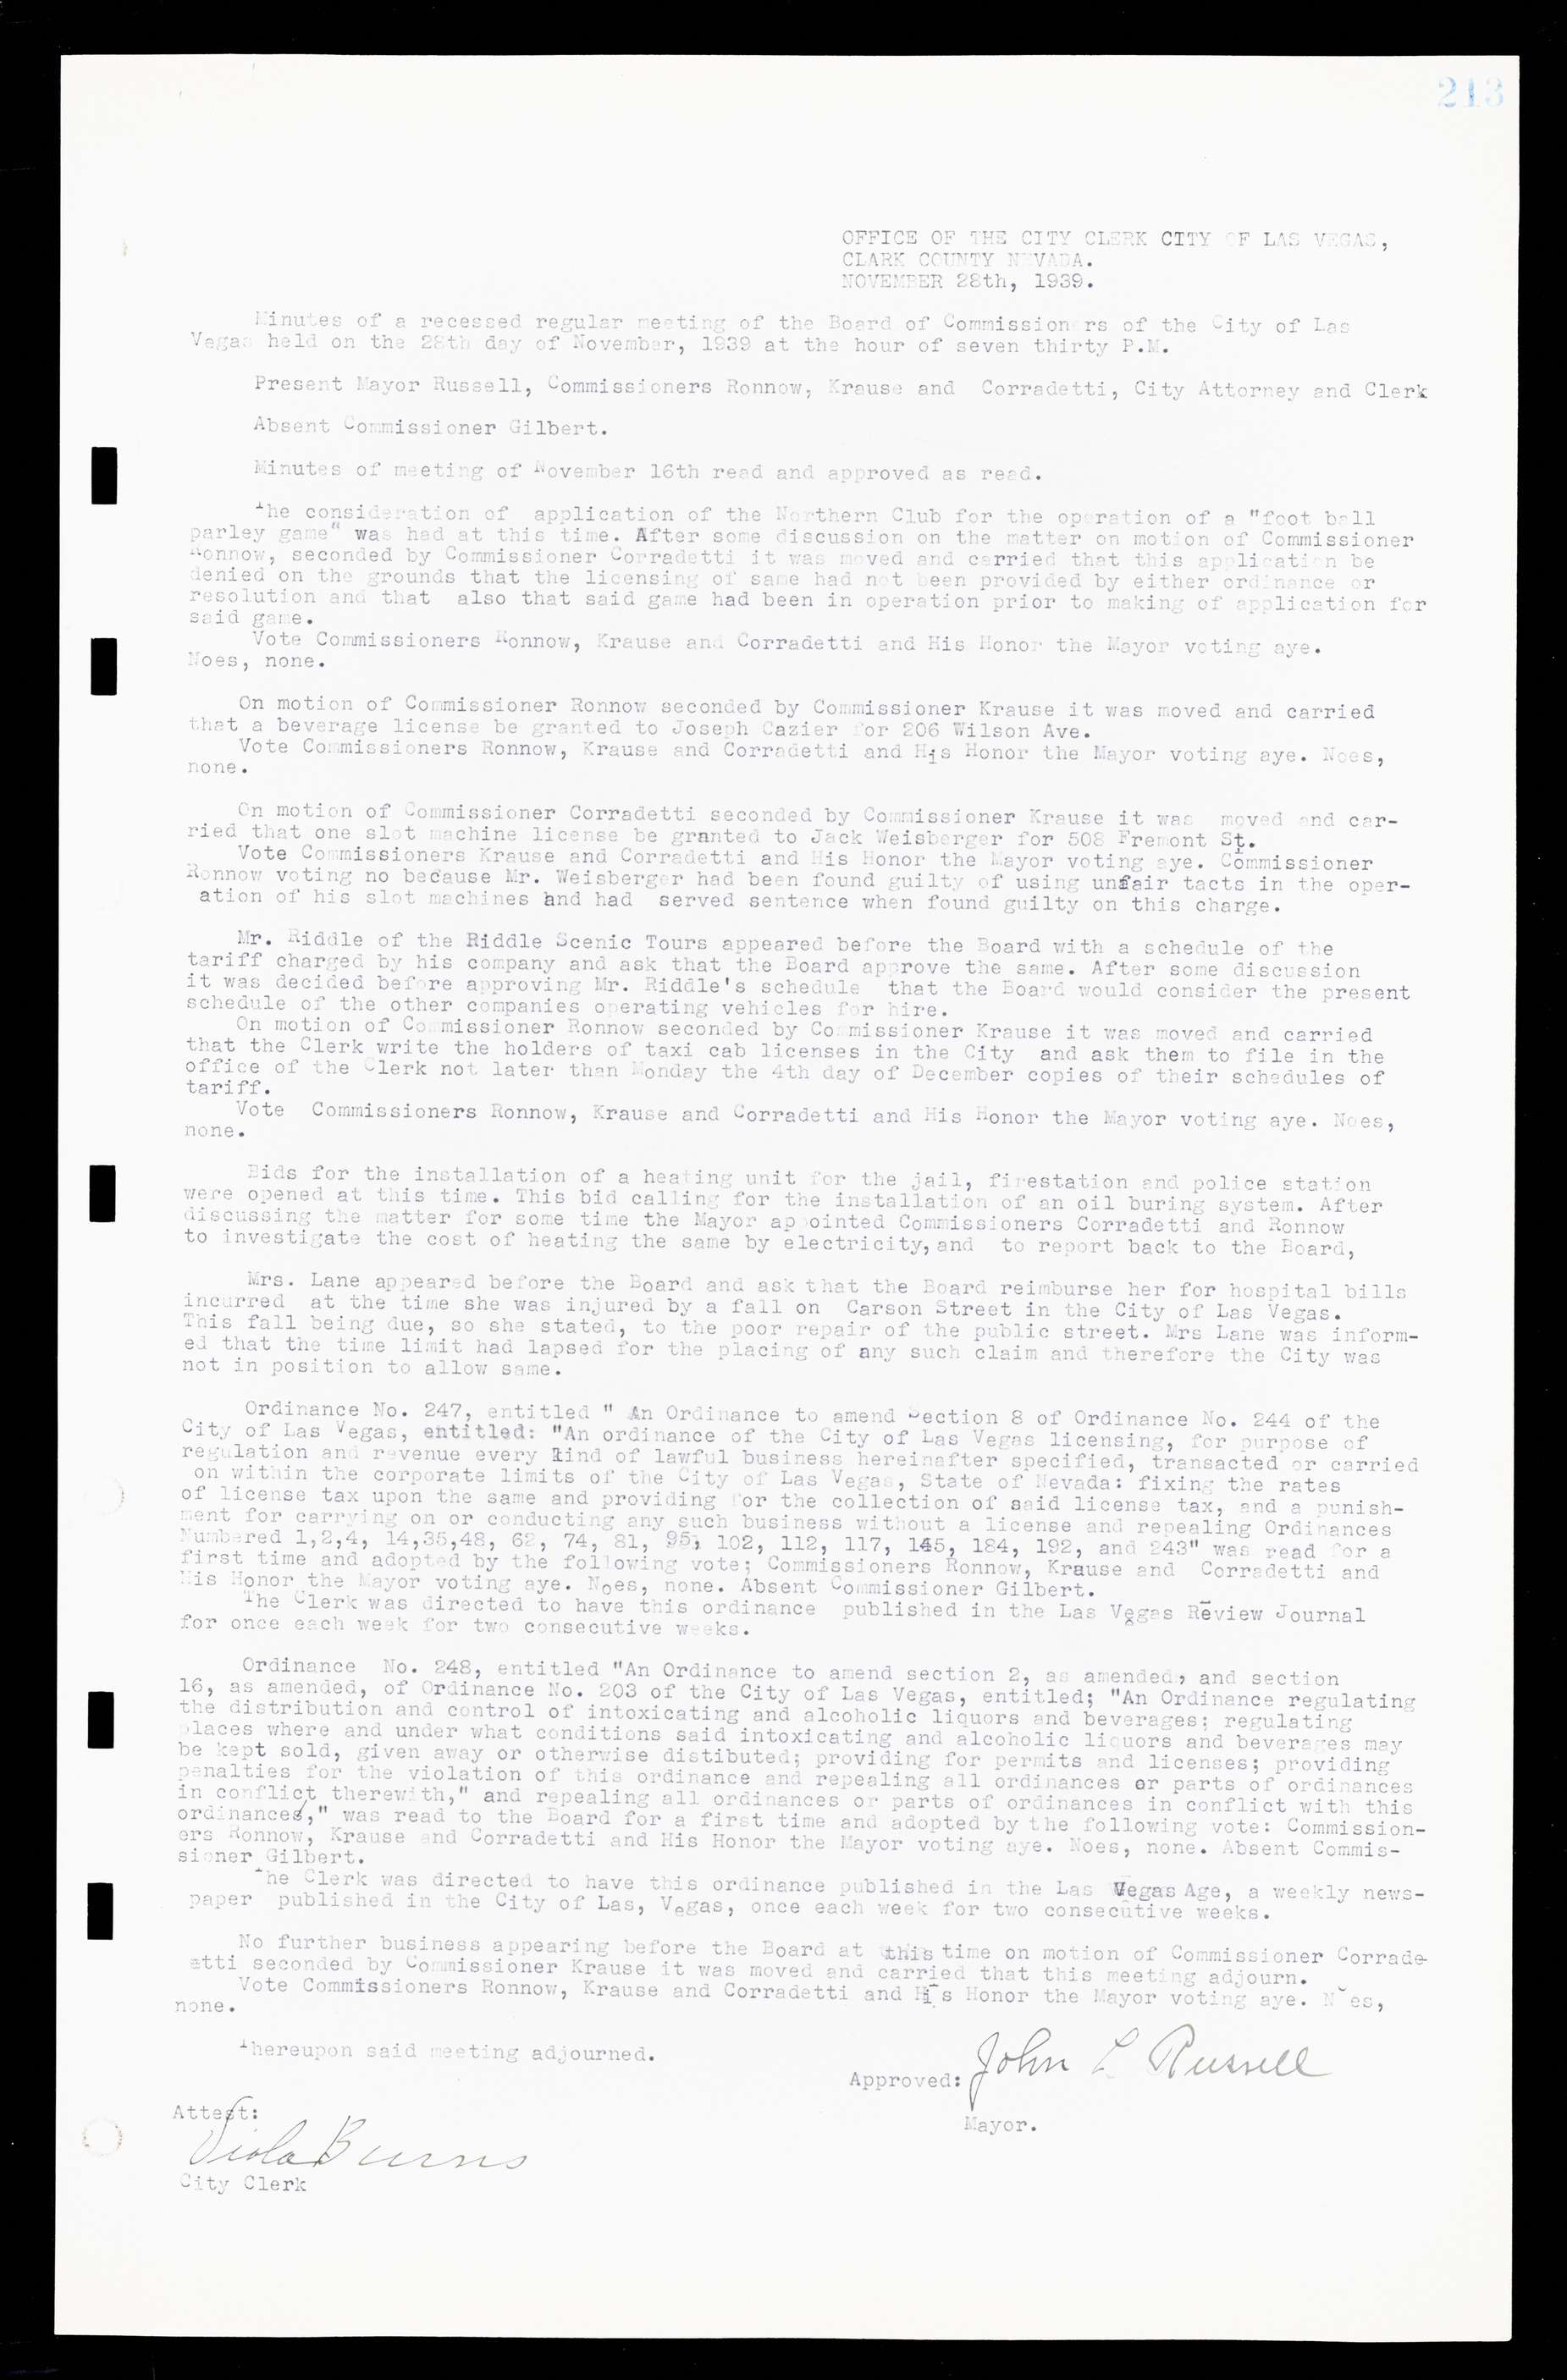 Las Vegas City Commission Minutes, February 17, 1937 to August 4, 1942, lvc000004-231